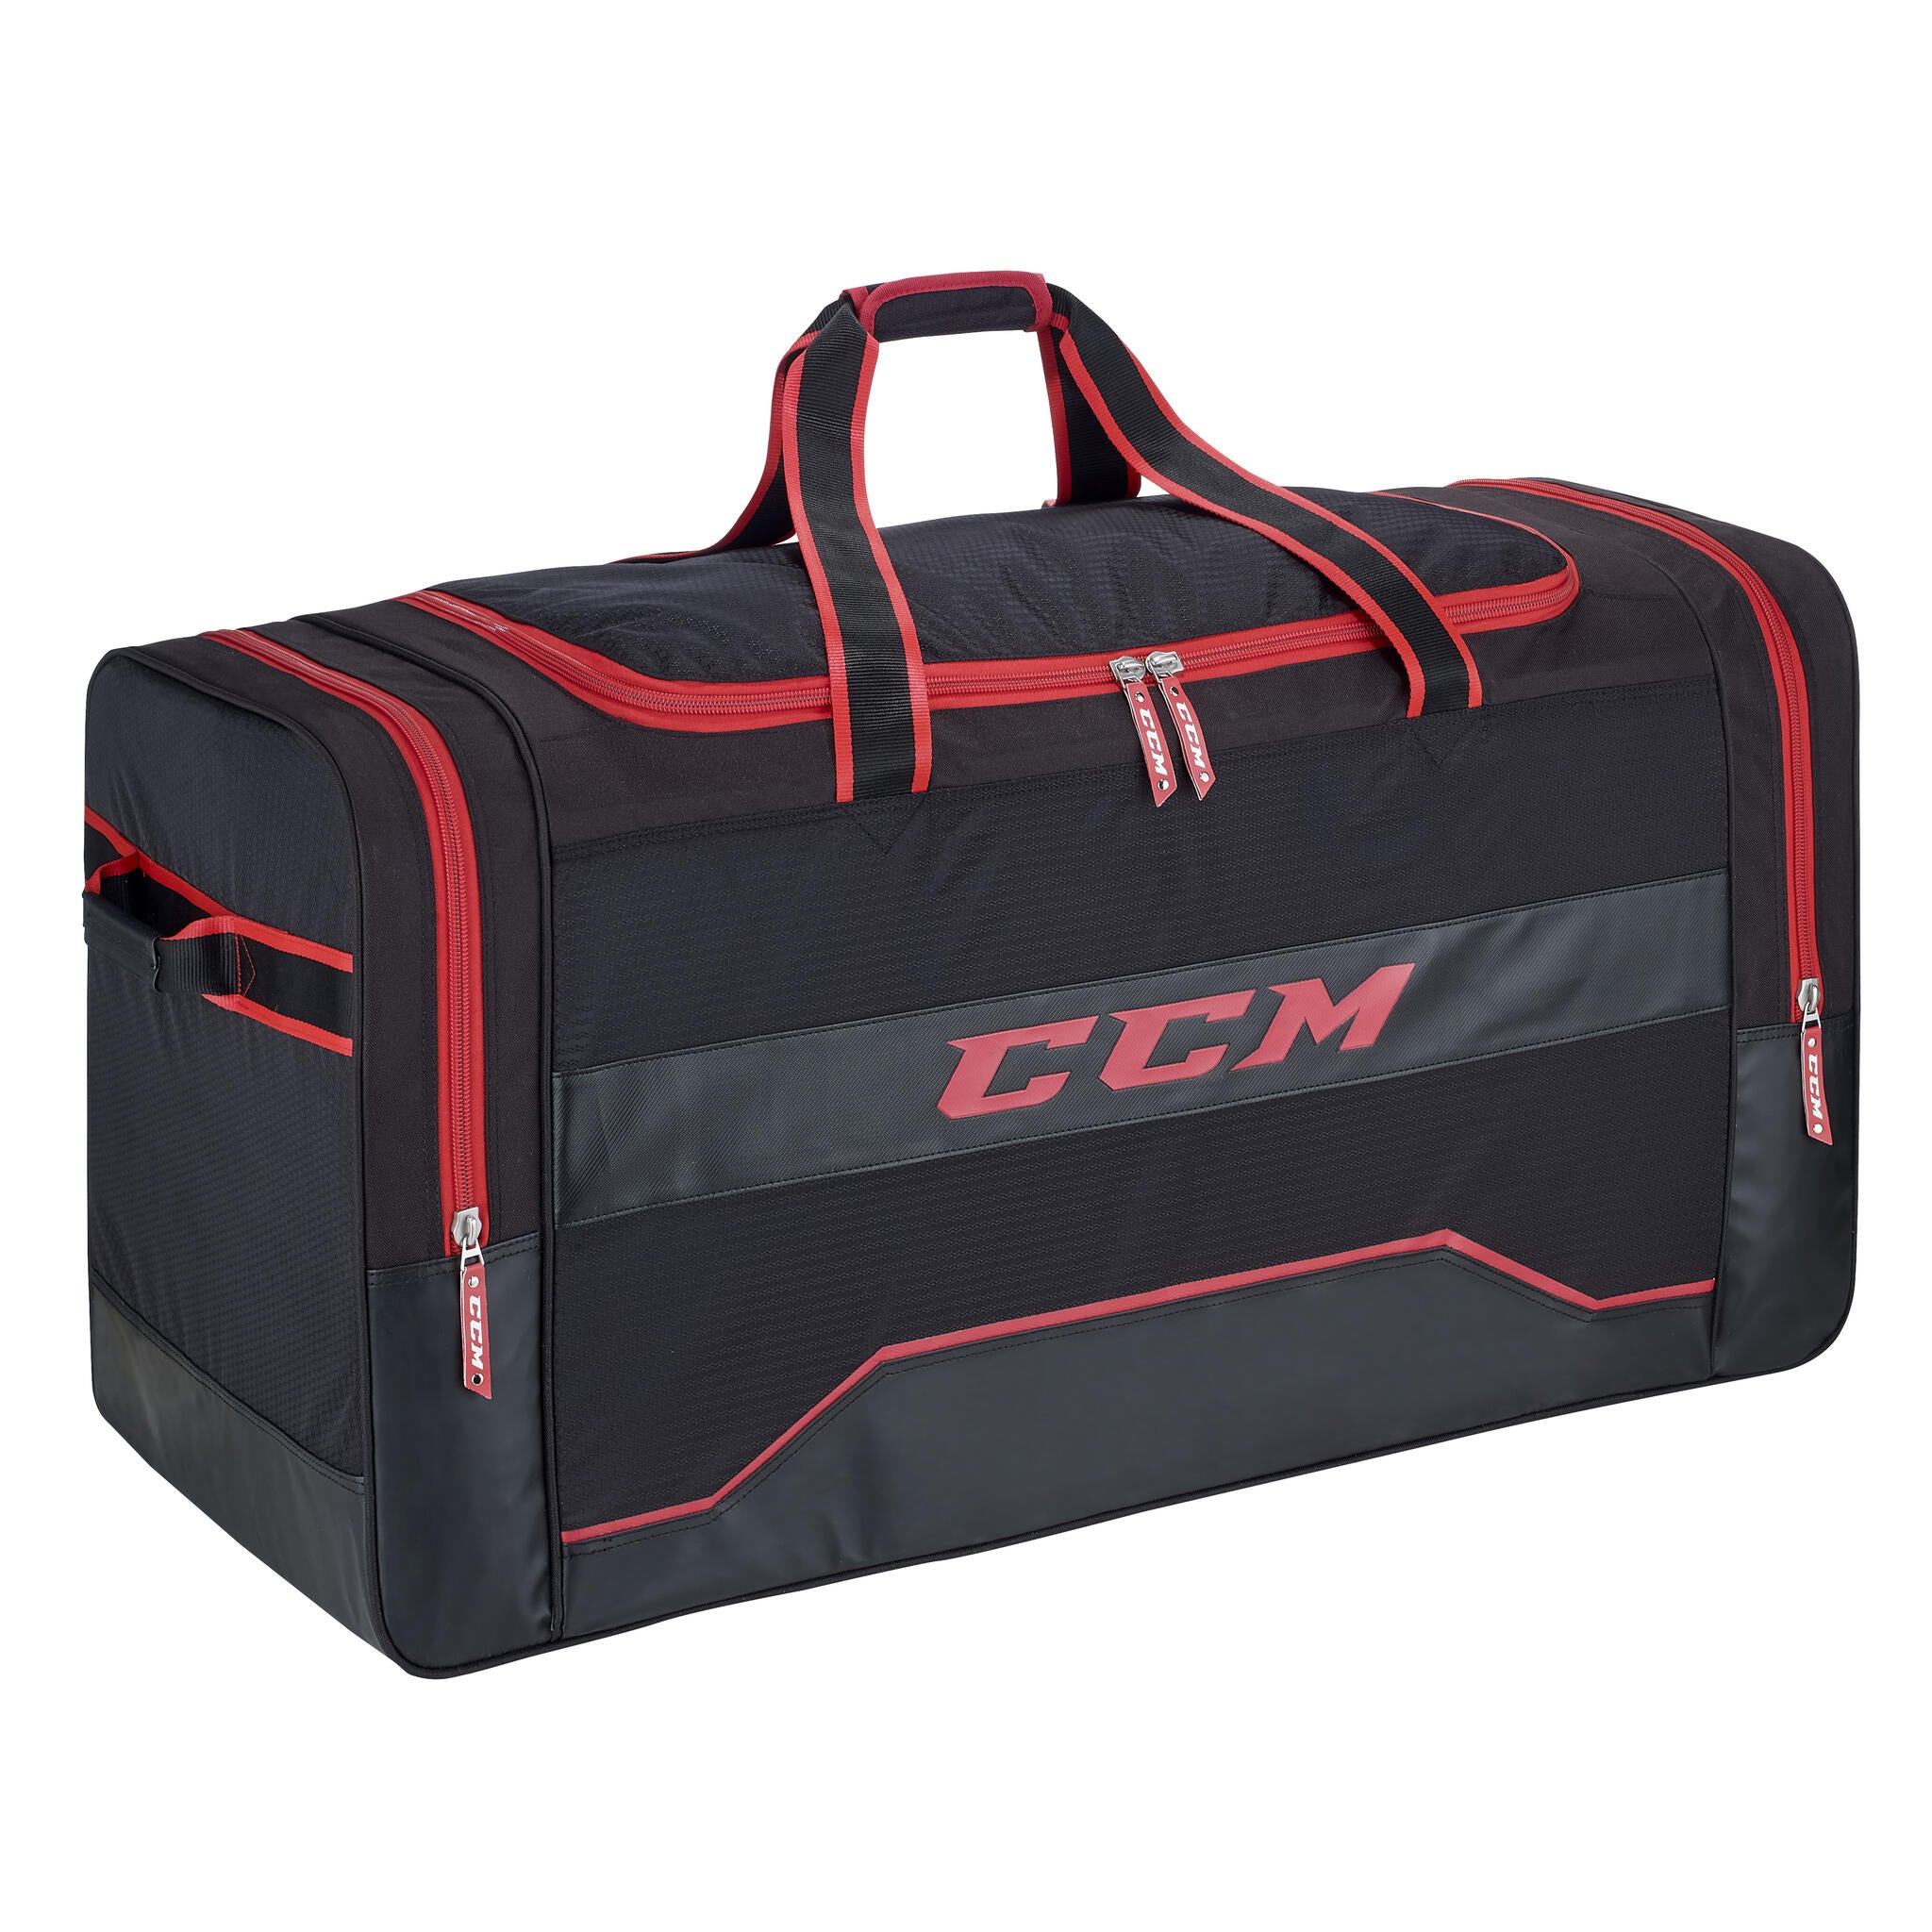 Warrior Q20 CarGo Carry Bag - Medium